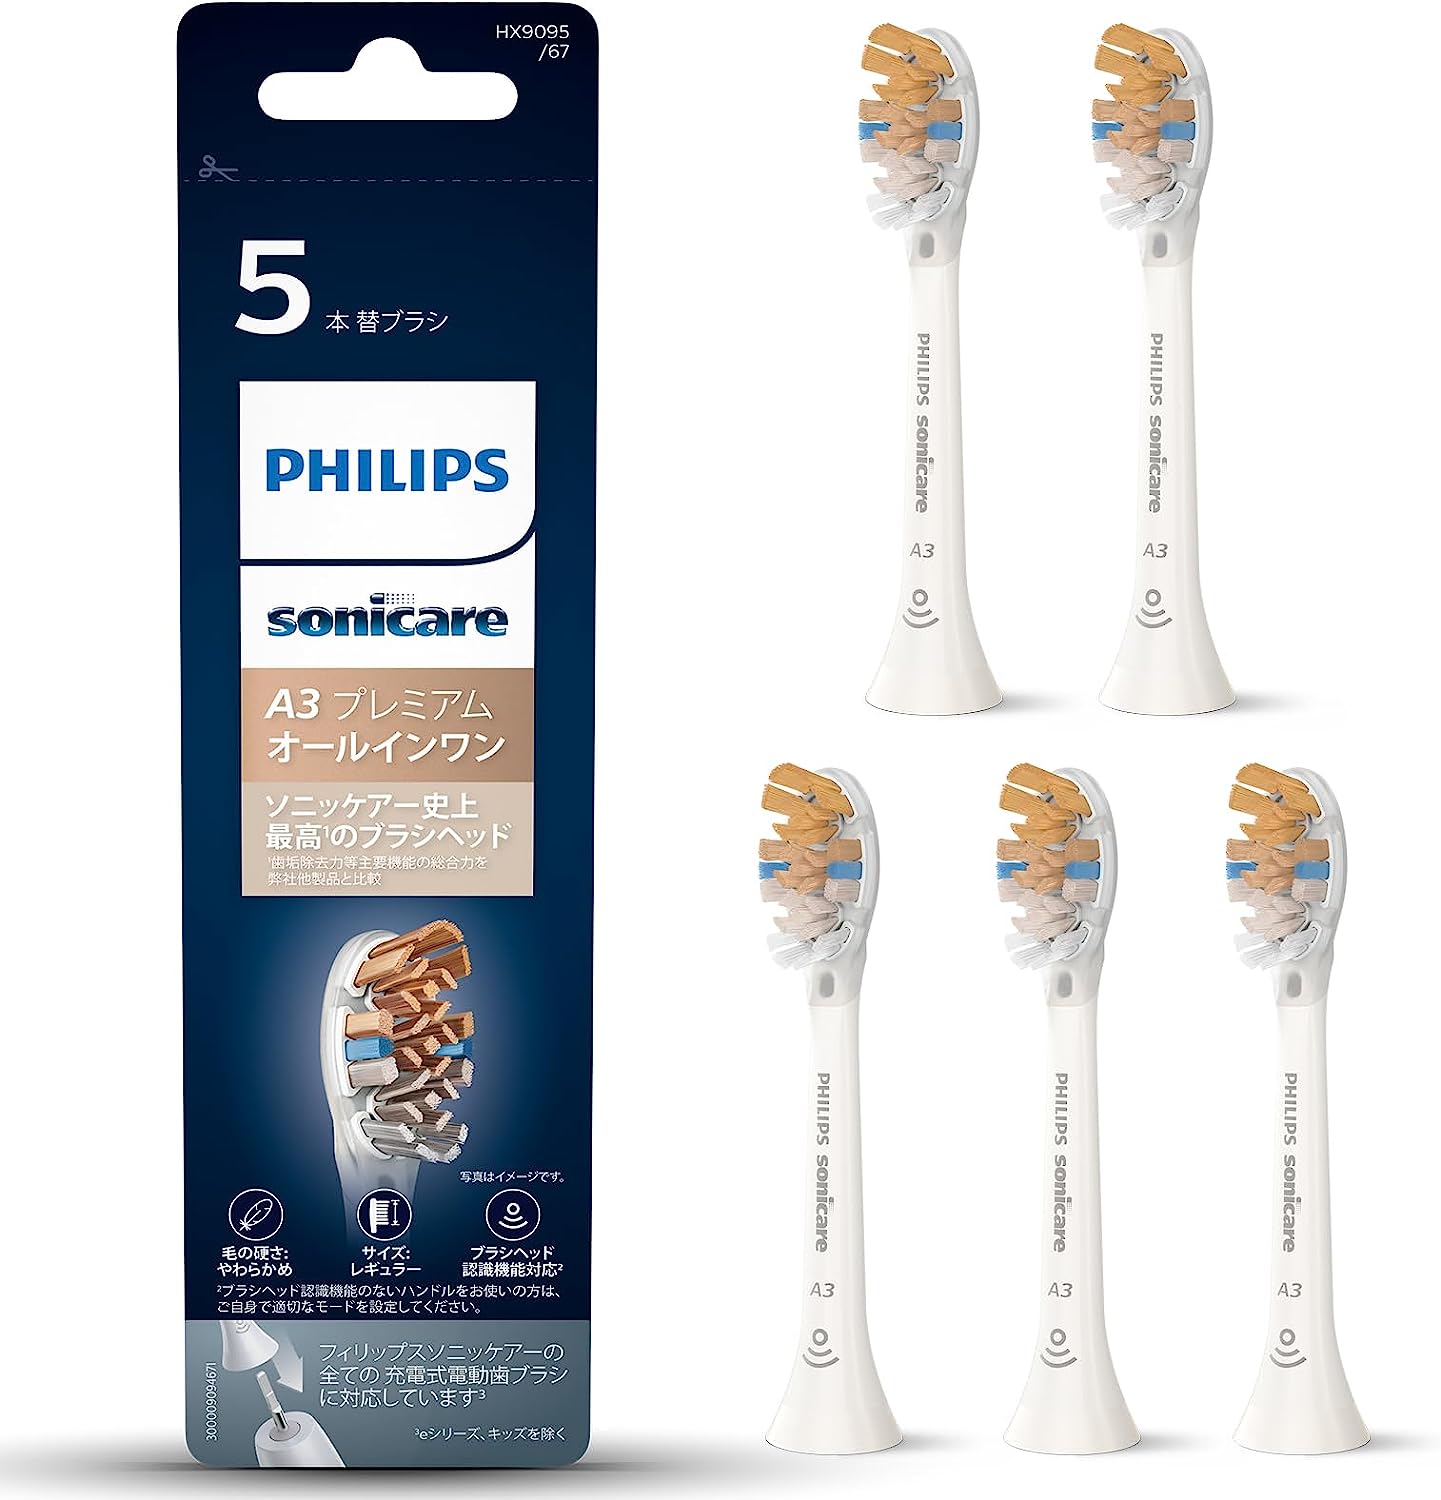 Philips ソニッケアー オールインワン ブラシヘッド レギュラー 5本入 HX9095/67（ホワイト） ソニッケアー 電動歯ブラシ替えブラシの商品画像